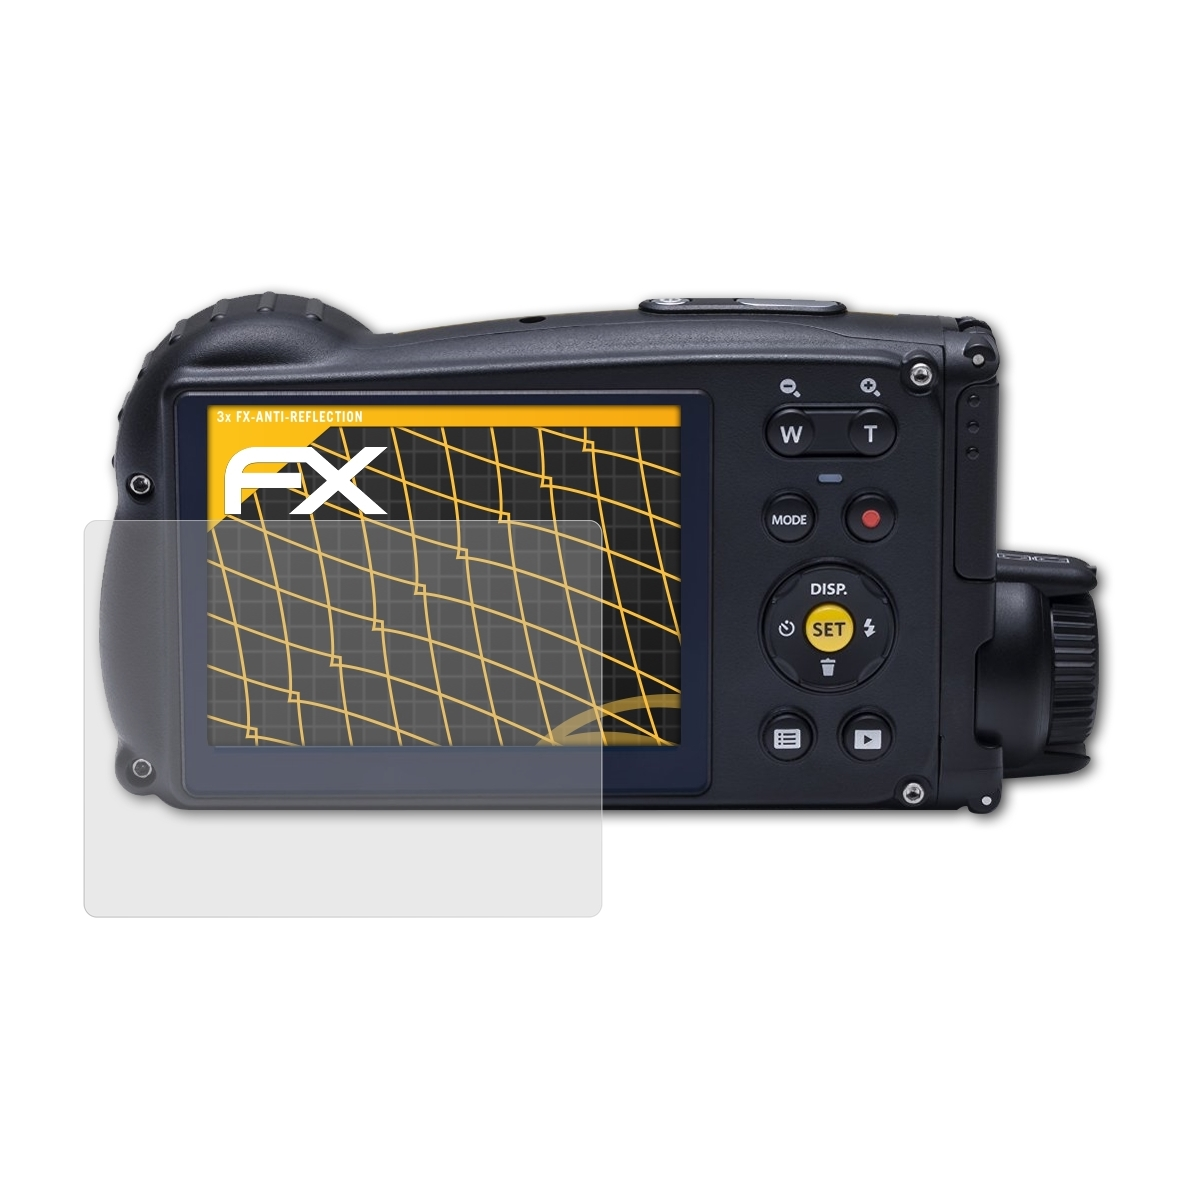 Displayschutz(für FX-Antireflex Kodak WP1) PixPro ATFOLIX 3x